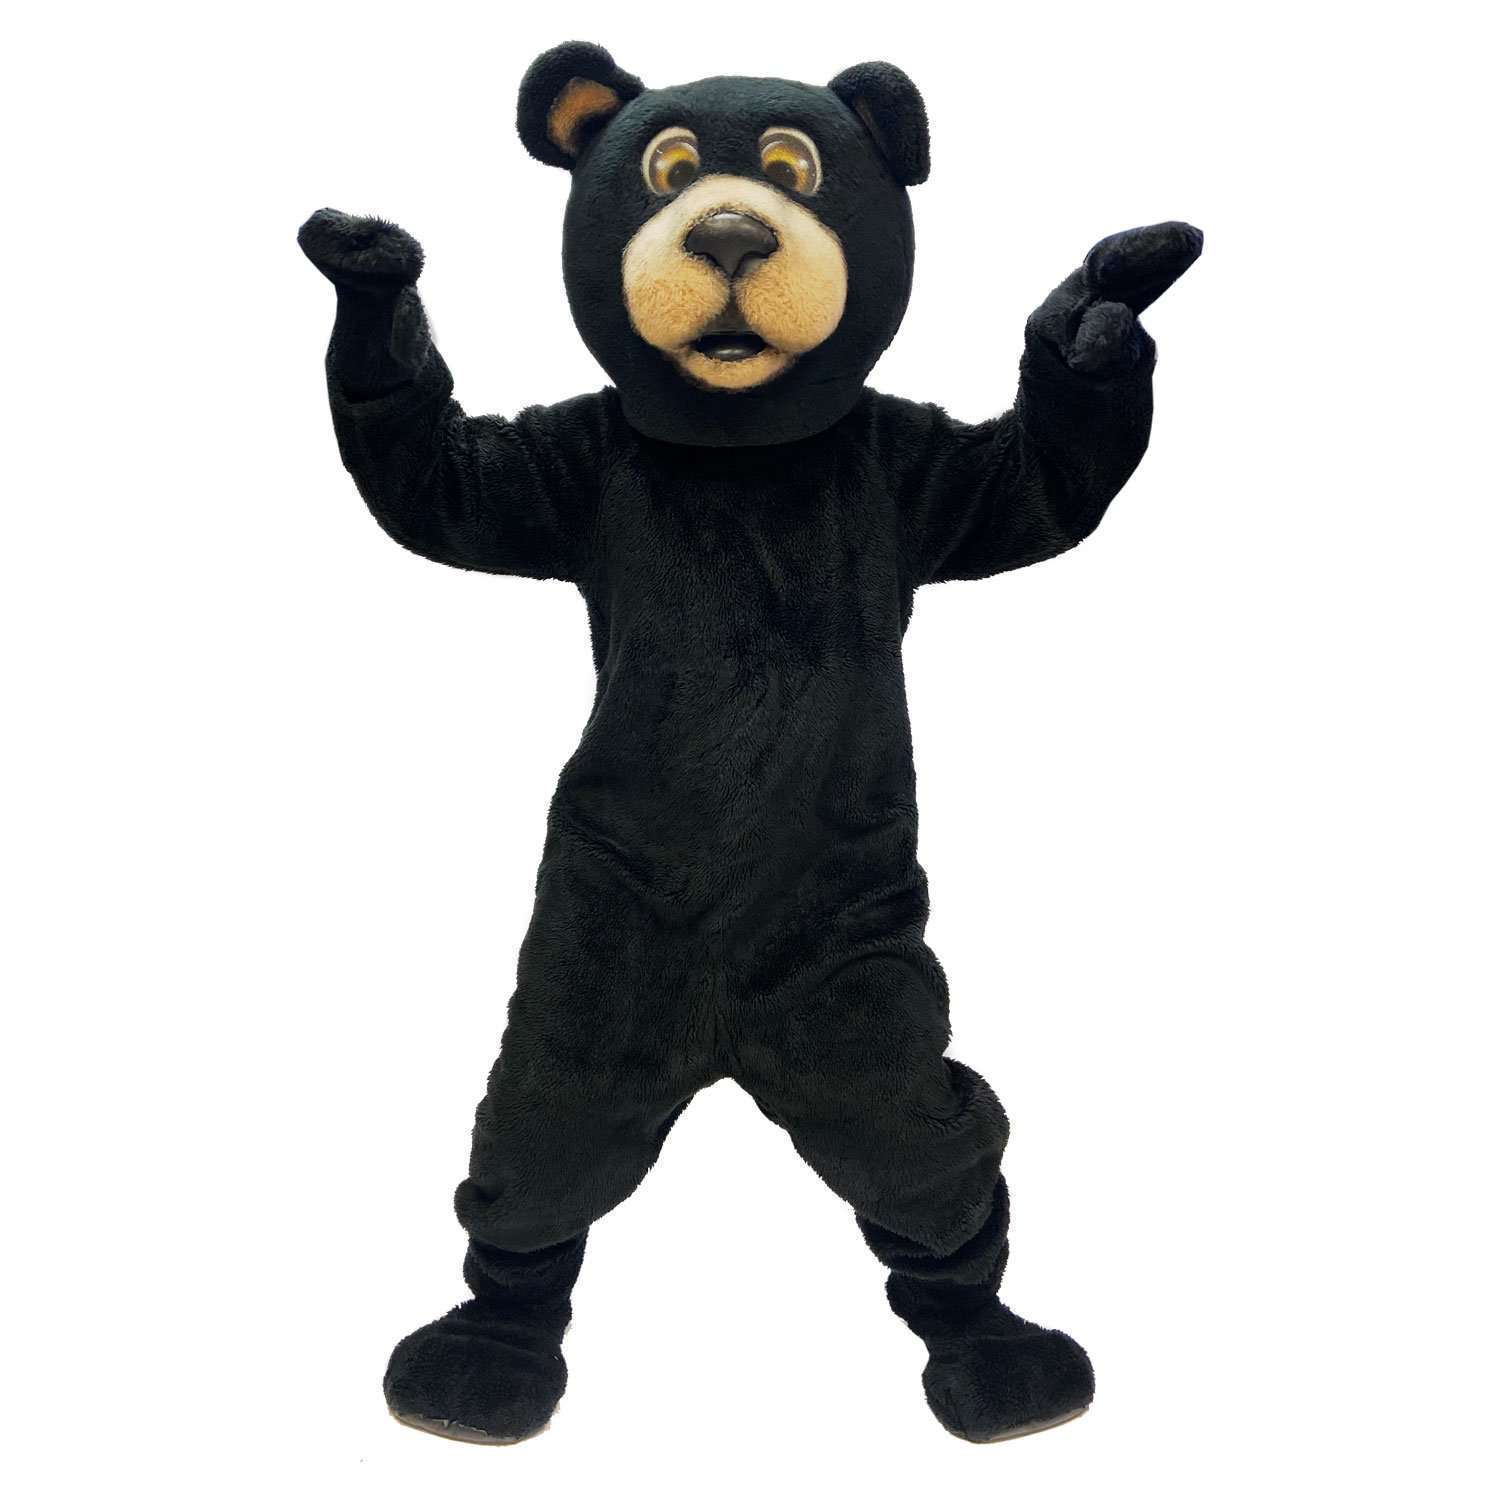 Wholesome Black Bear Mascot Adult Costume